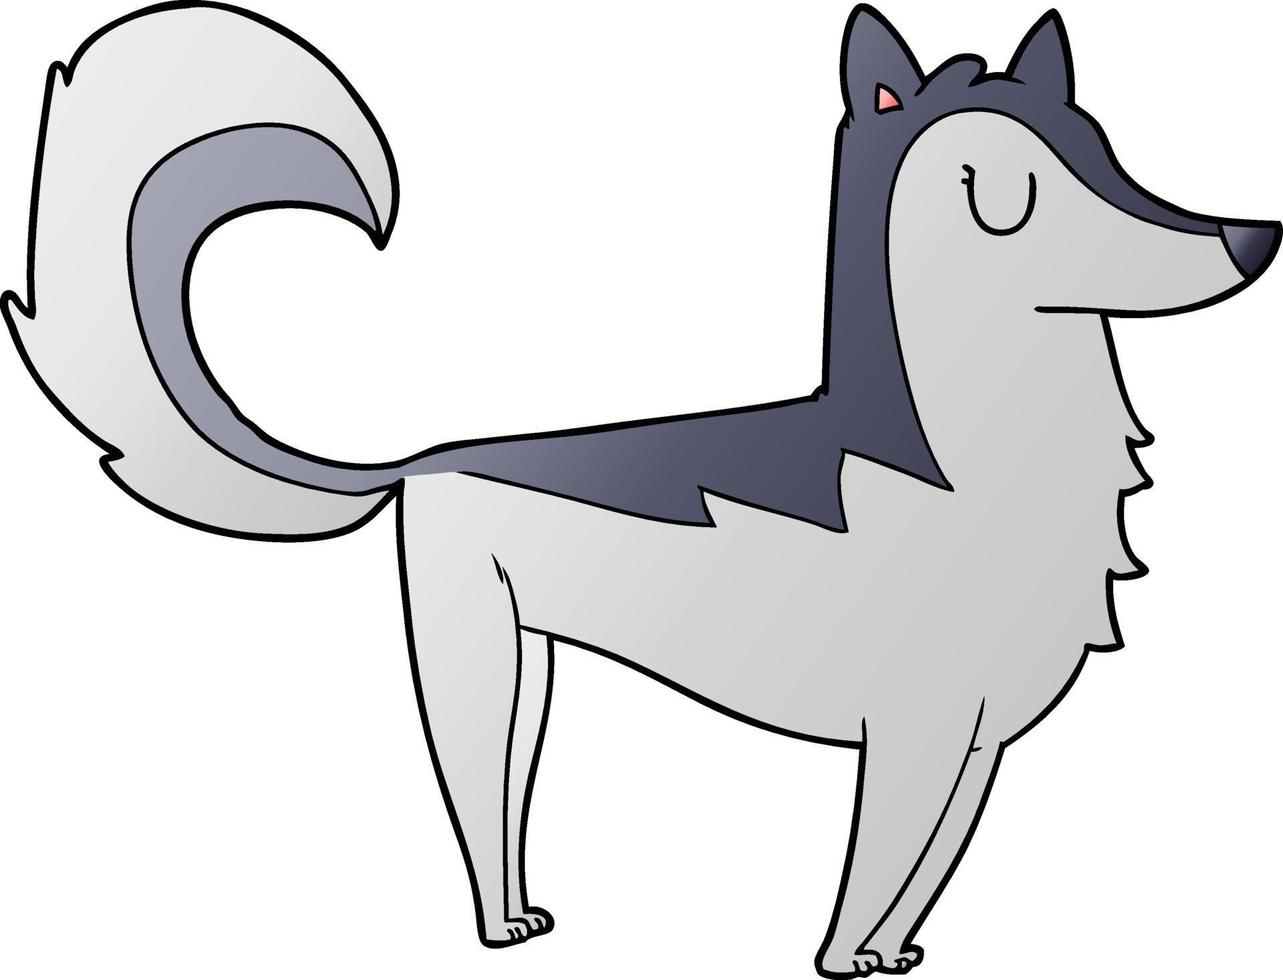 husky gris de dibujos animados vector